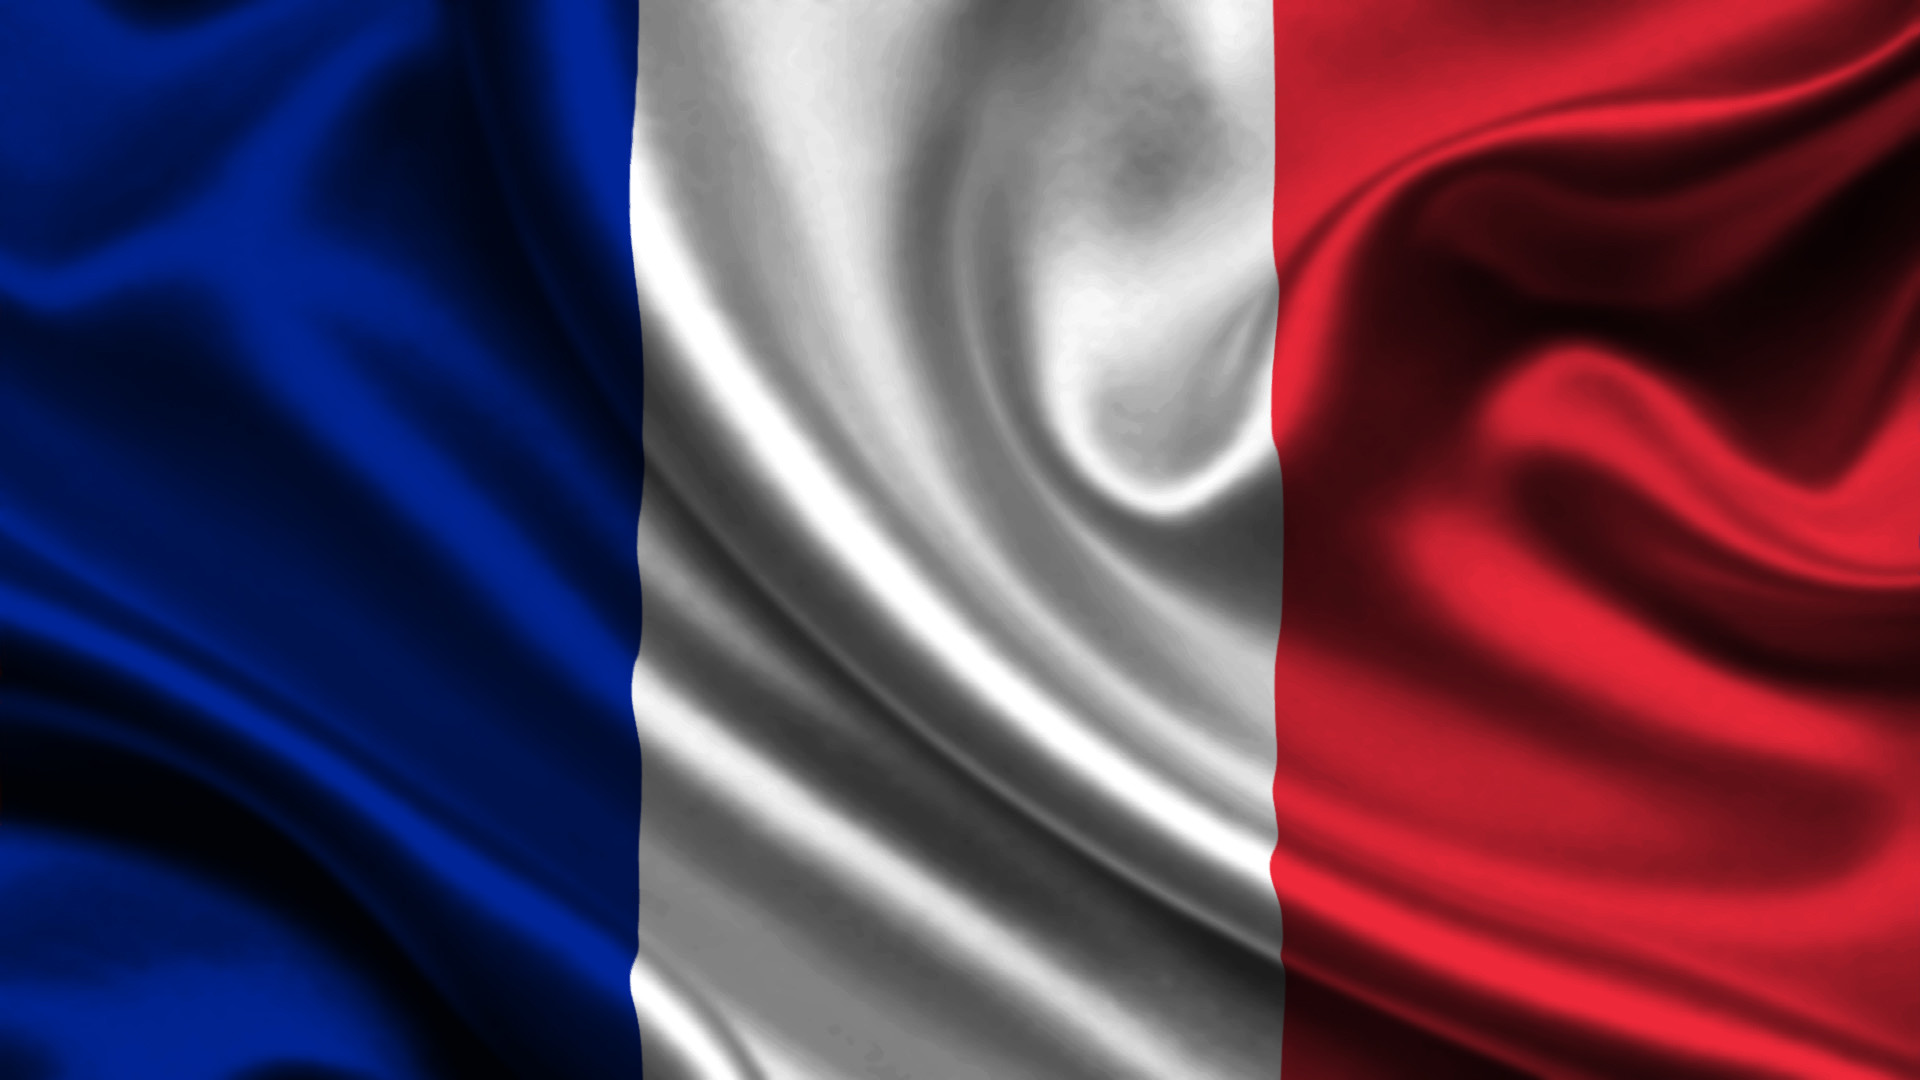 1920x1080 France Flag Wallpaper | Wallpapers | Pinterest | France flag, Flags and  Wallpaper